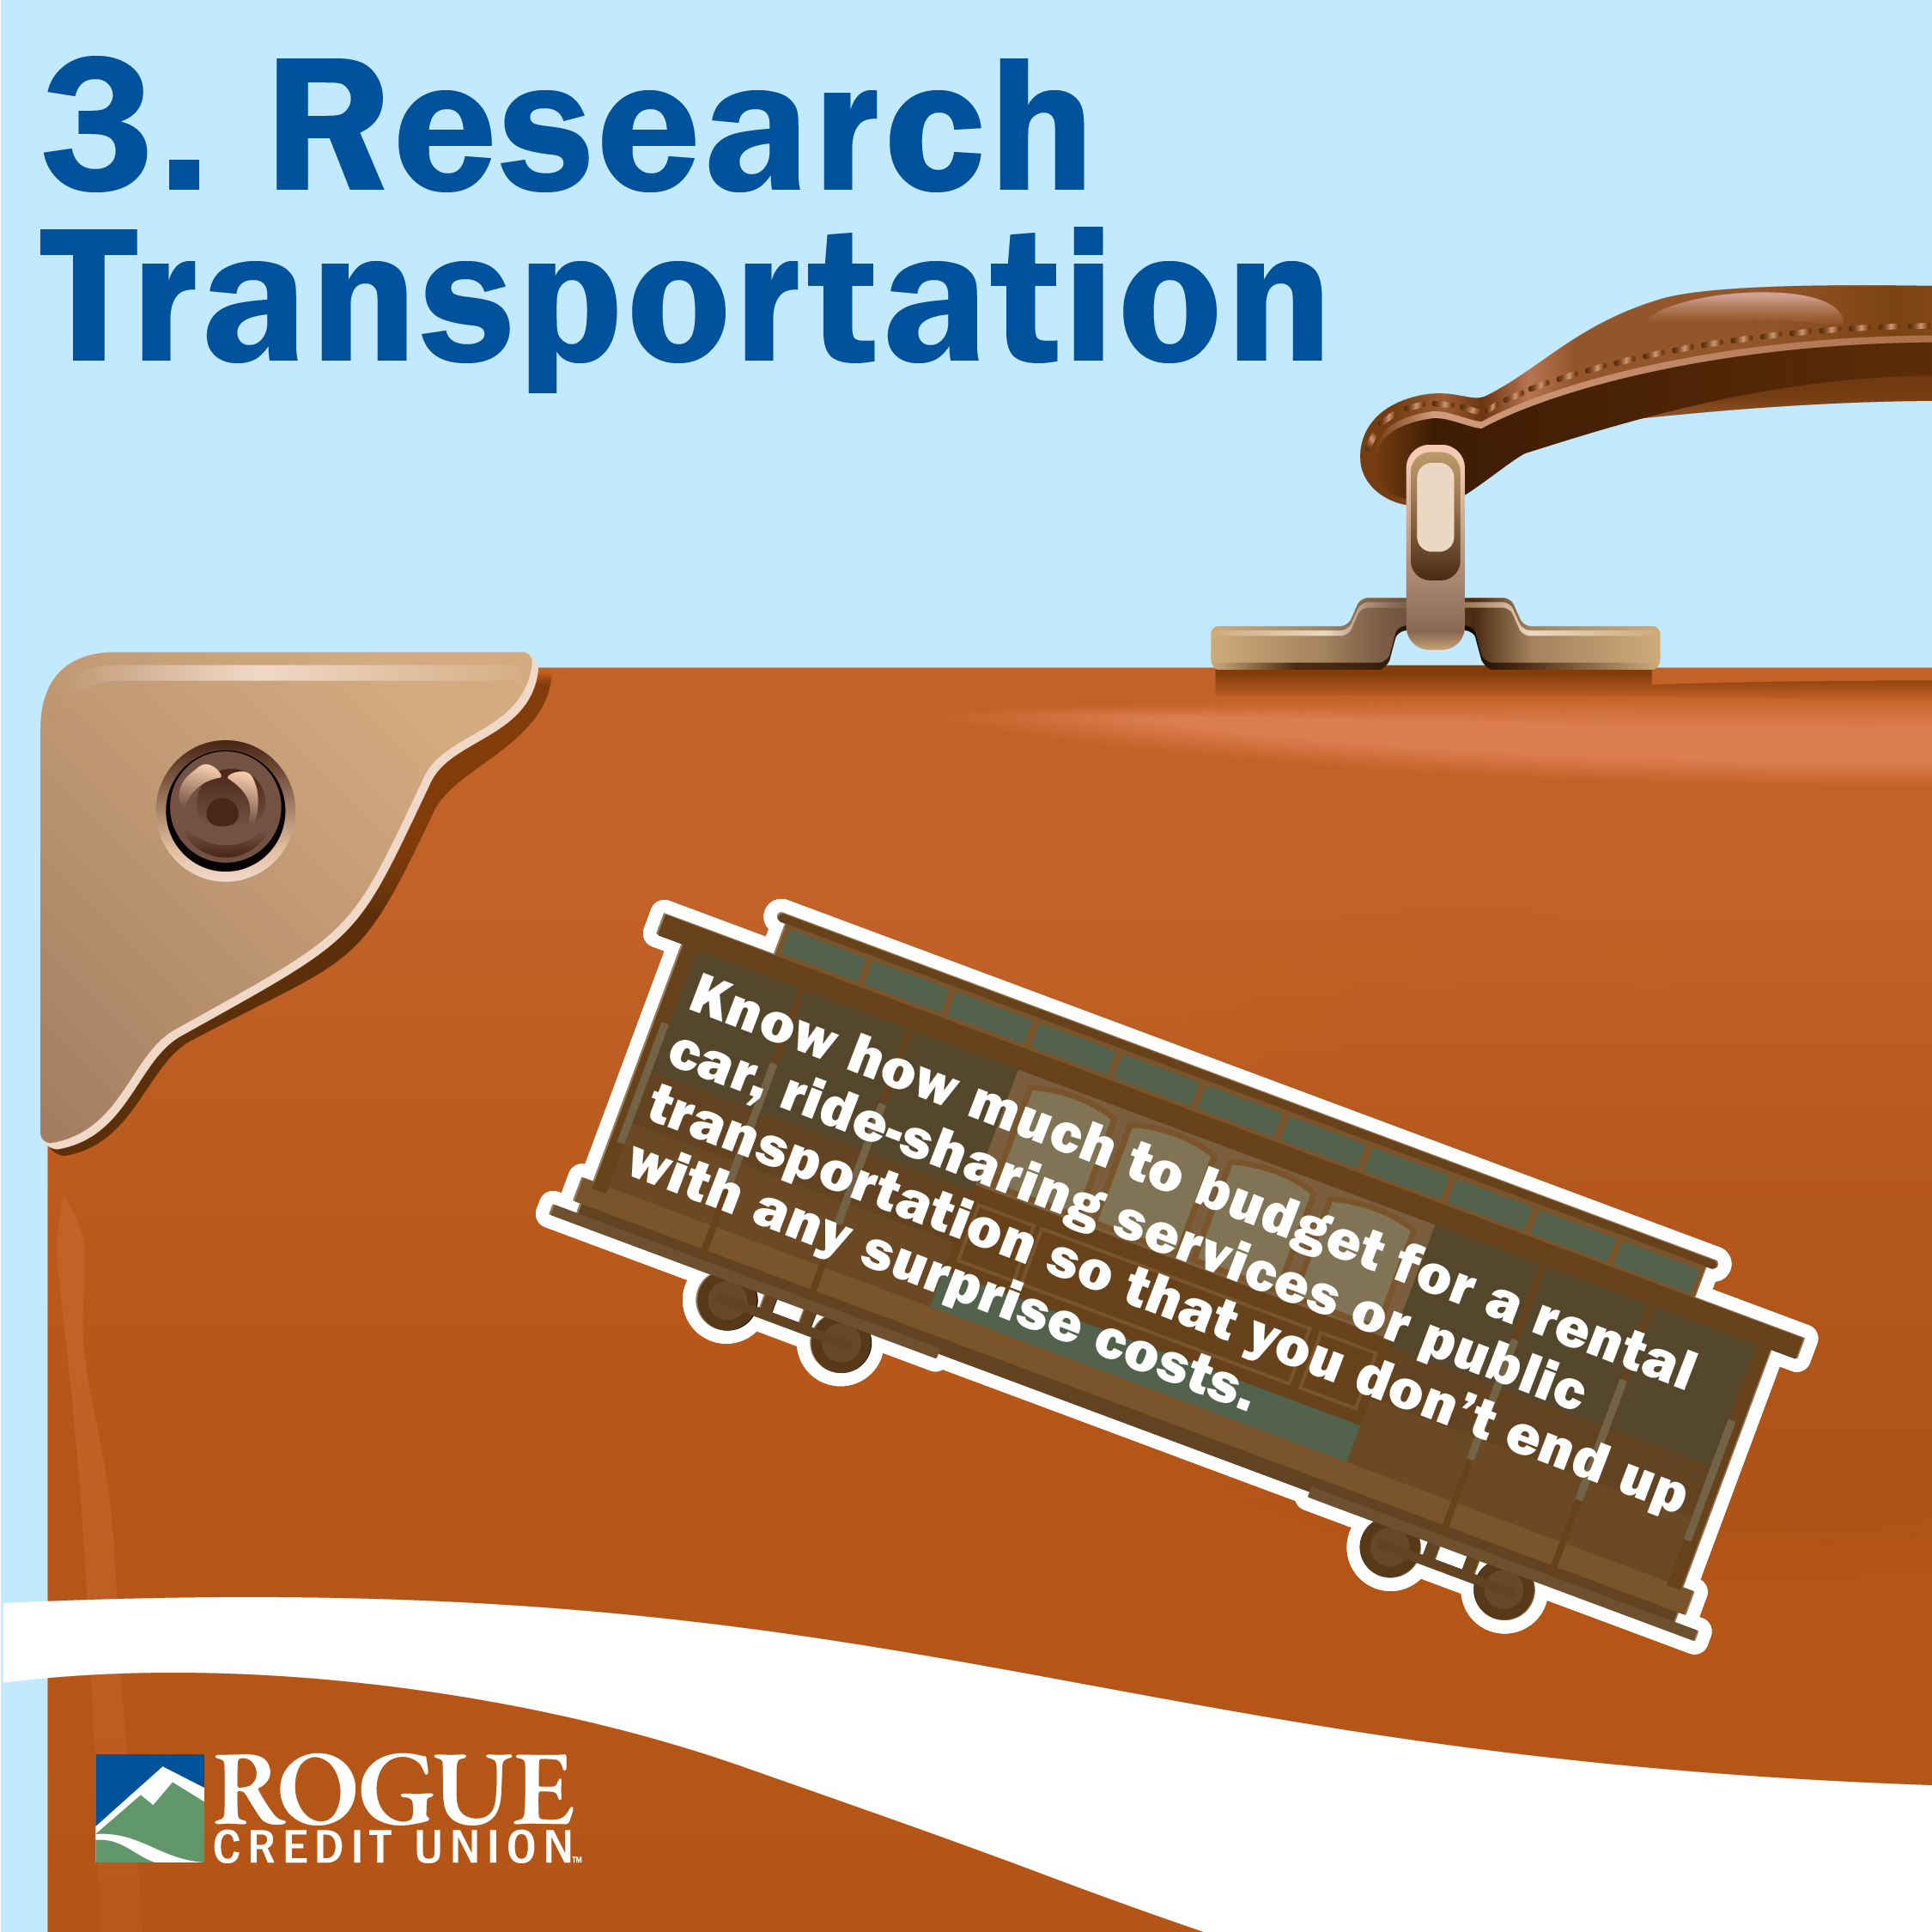 Research Transportation